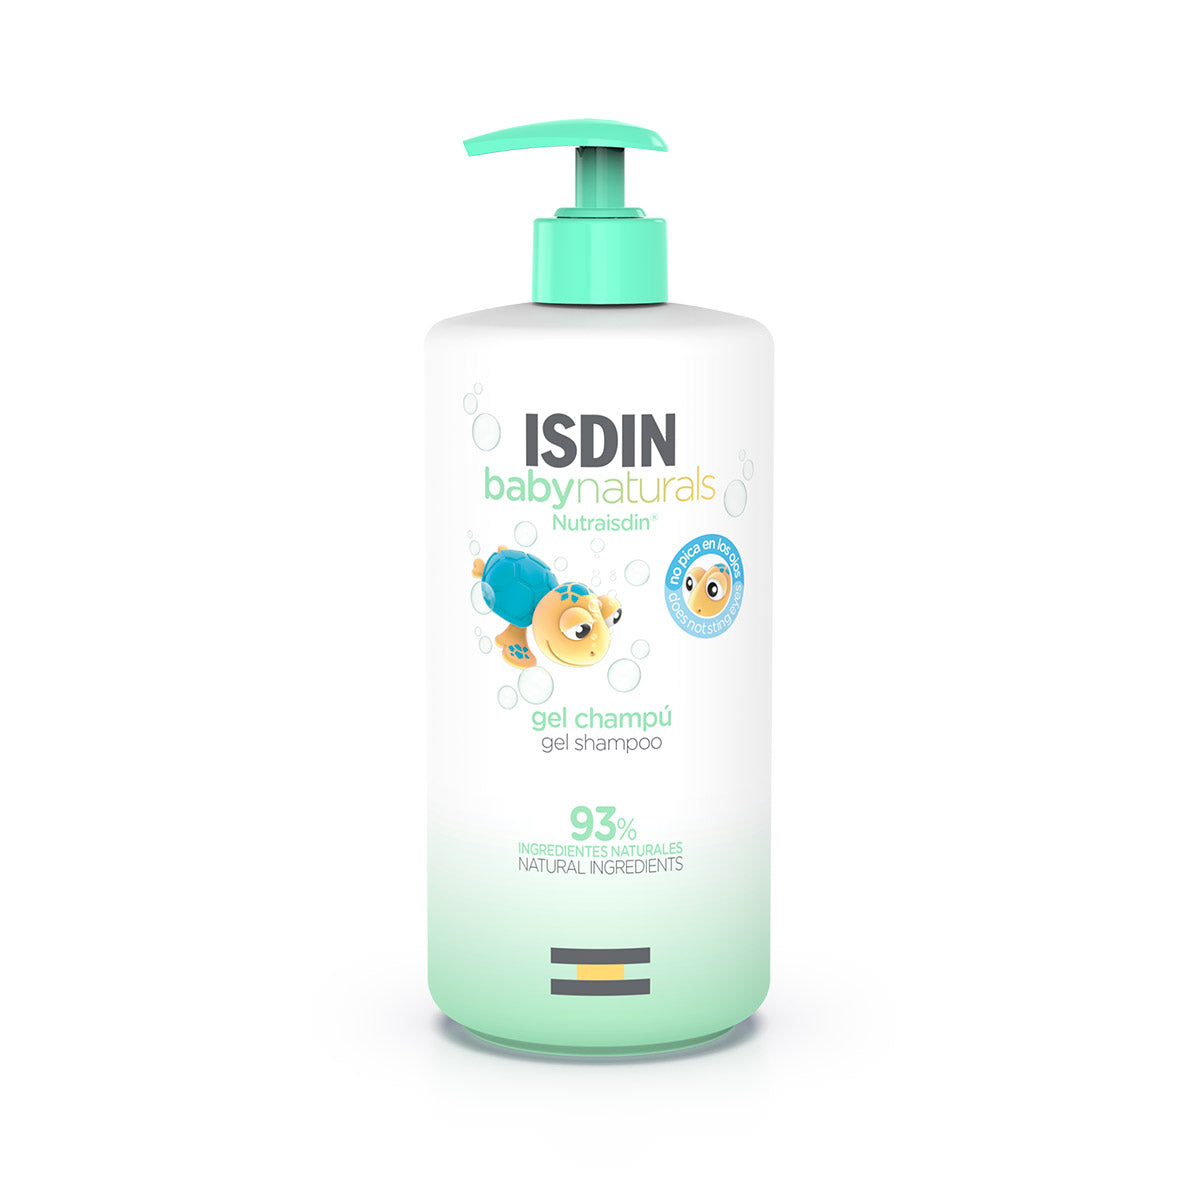 ISDIN Nutraisdin Baby Naturals Gel Shampoo 750ml